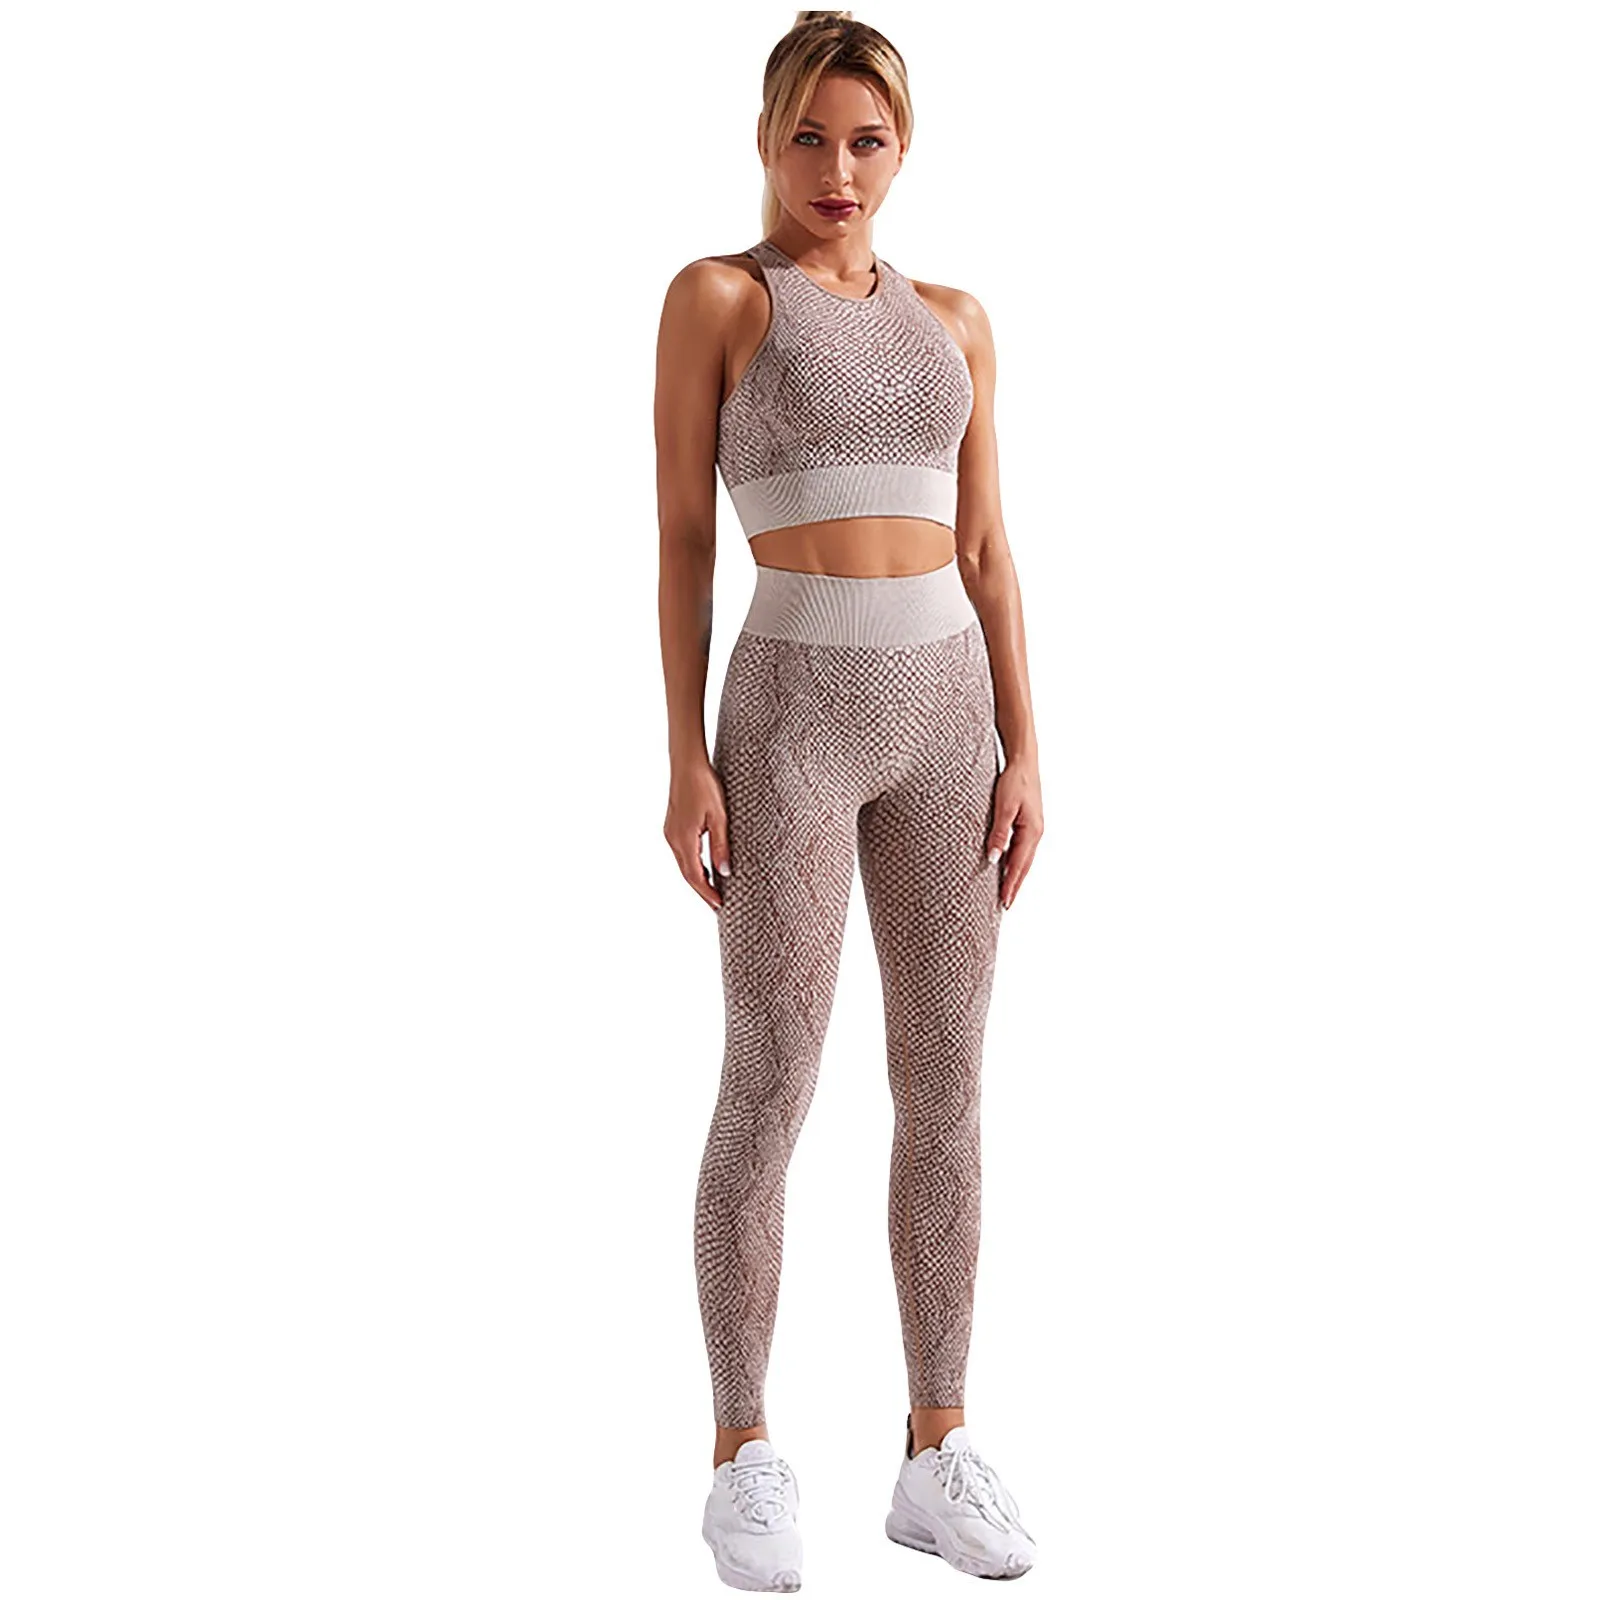 GRT Fitness H344b9852dafa4049972d48fb90c7b8261 Seamless Women Yoga Set Workout Shirts Sport Pants Gym Clothing Short Crop Top High Waist Running Leggings Sports Set 2021 